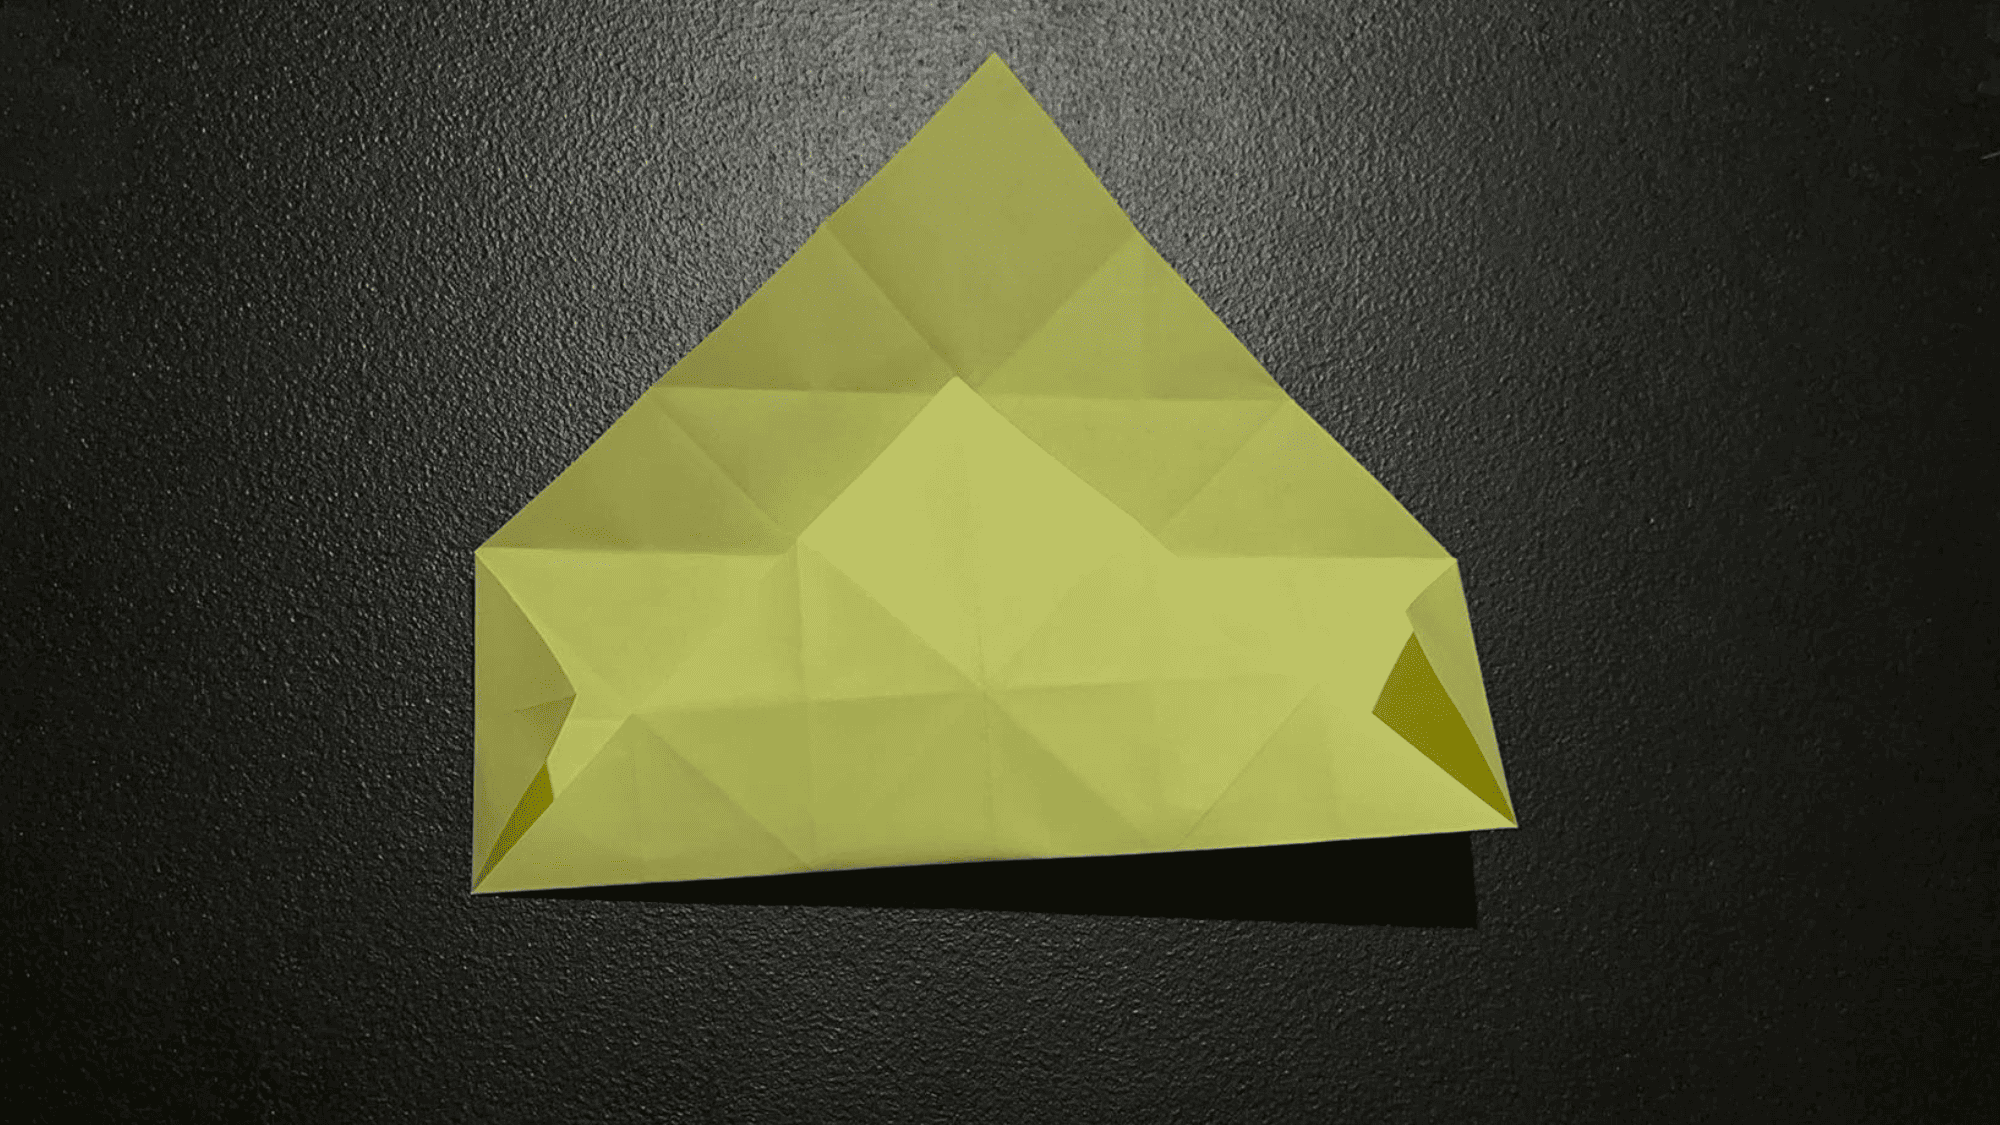 How to Make a Unicorn Origami: Origami Unicorn Instructions